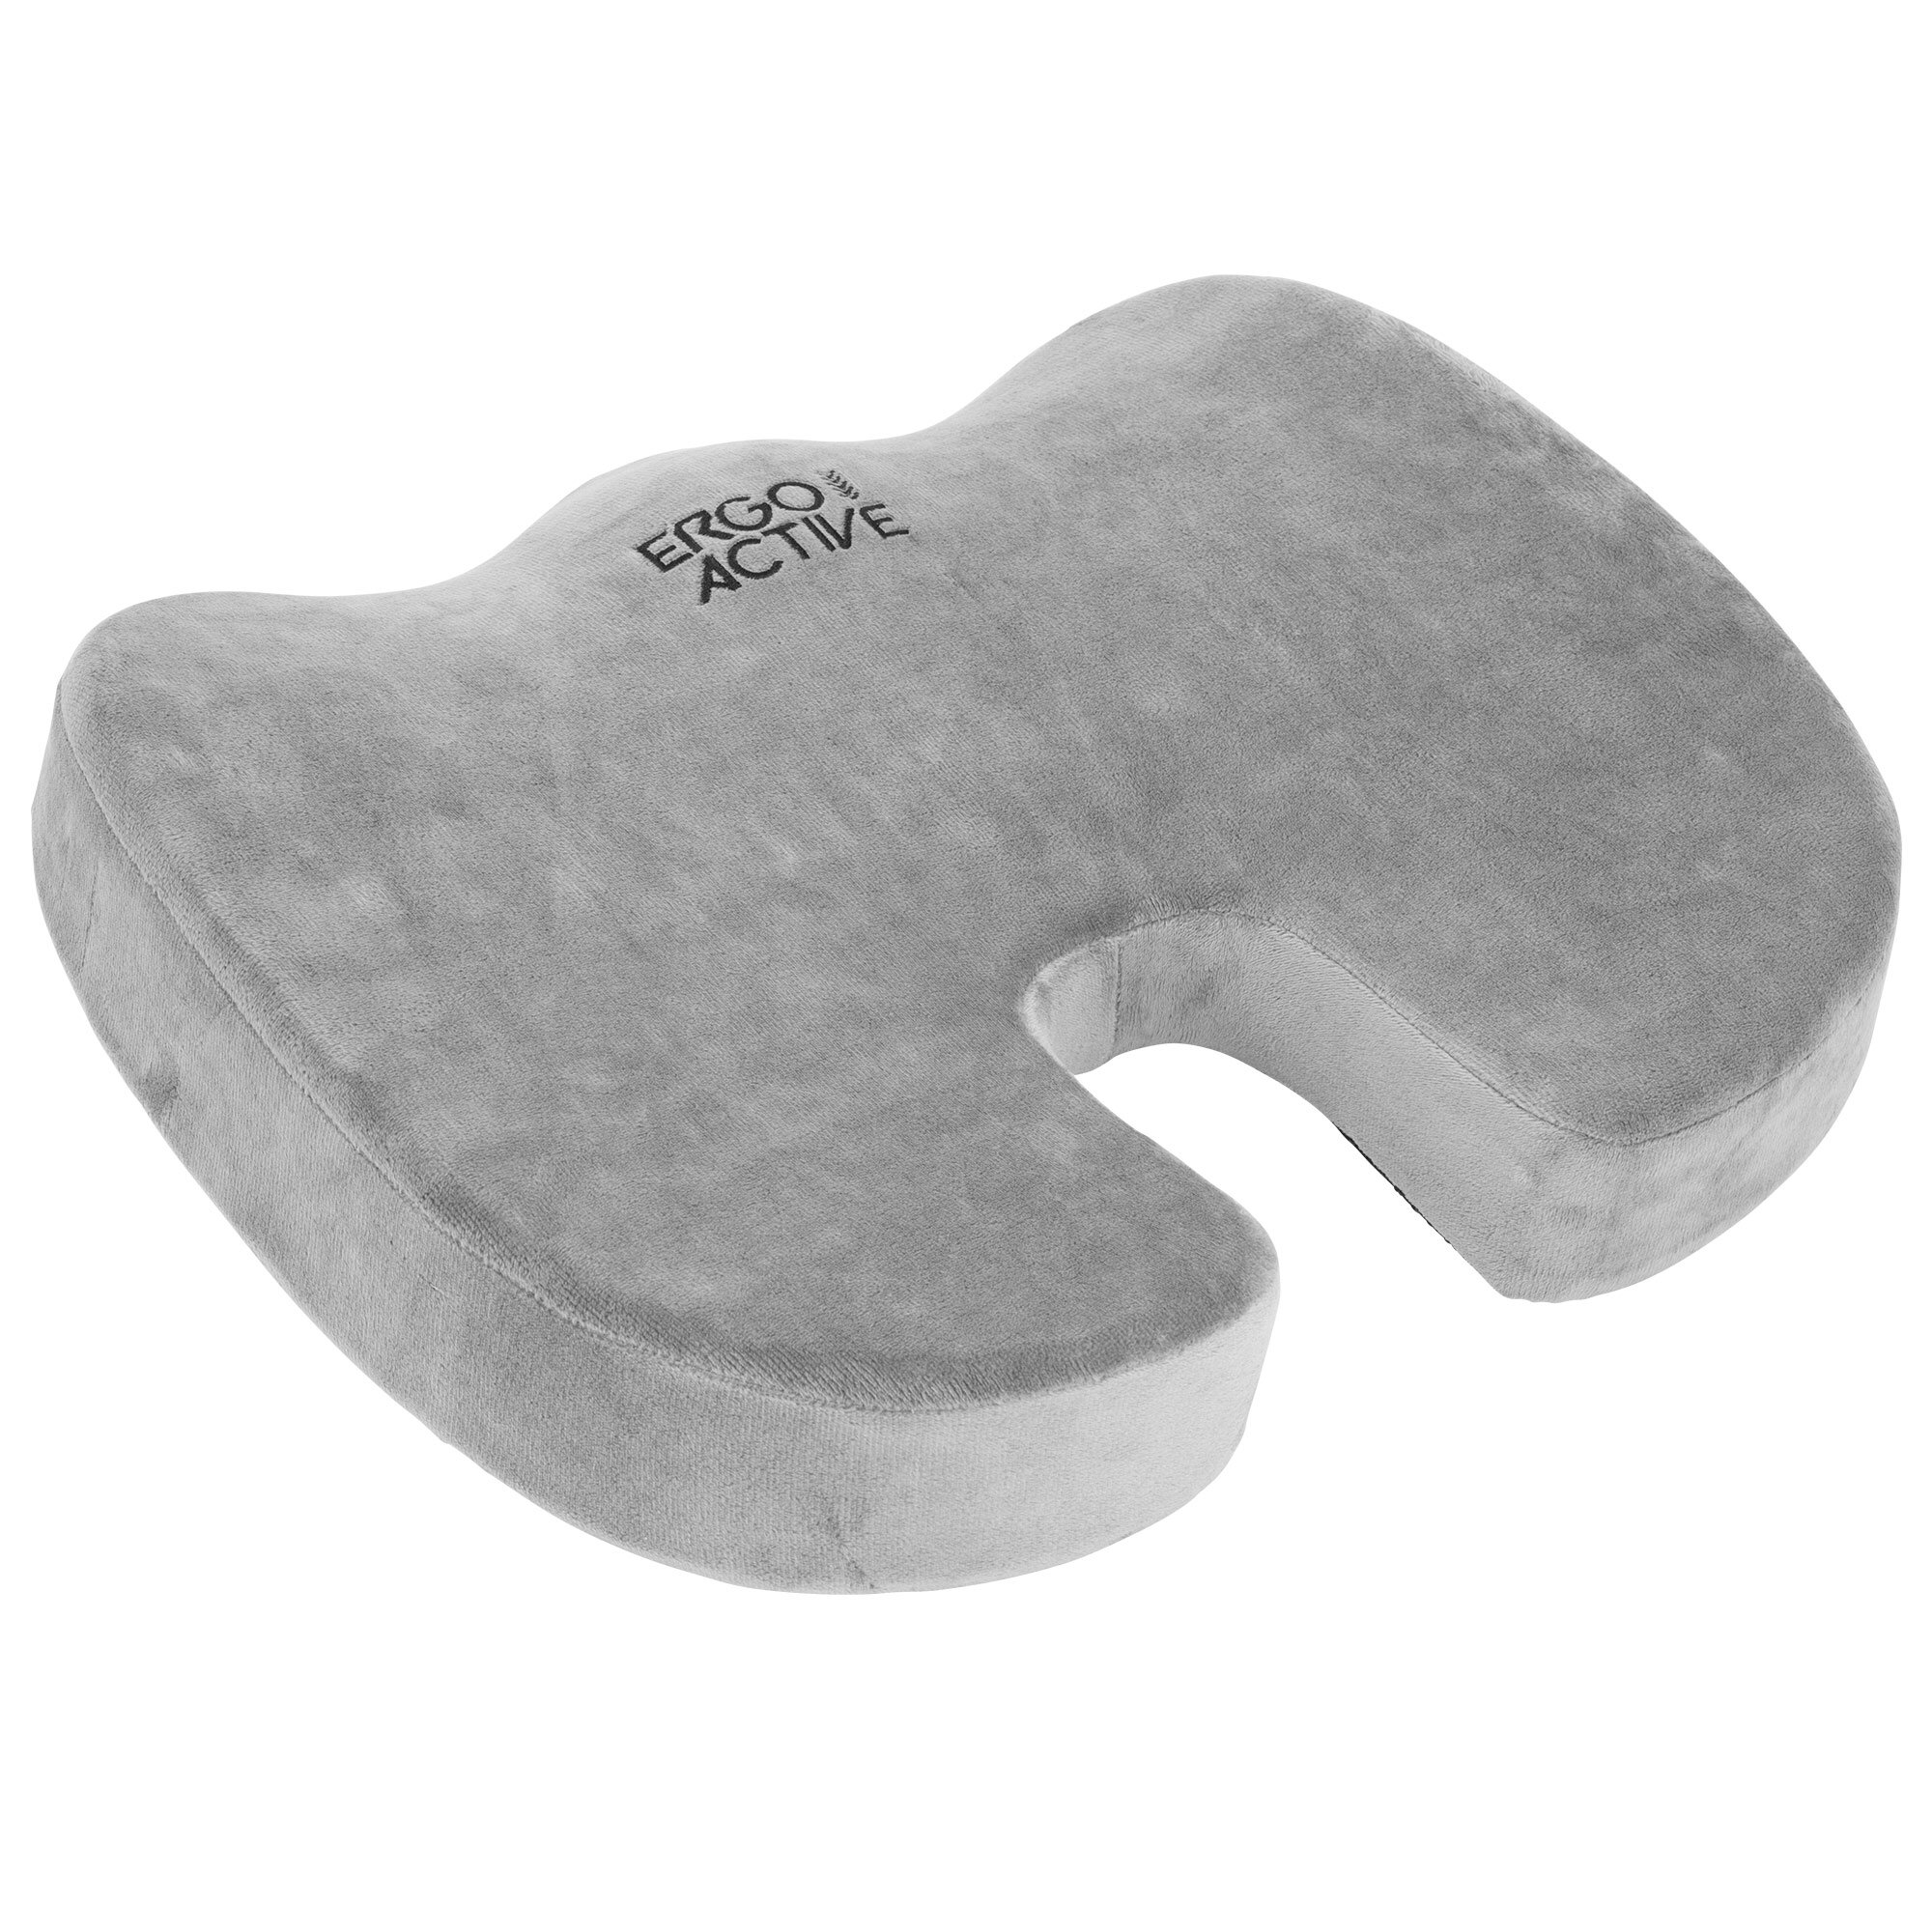 Gel Memory Foam Seat Cushion with Chair Ties - Orthopedic Seat Pad